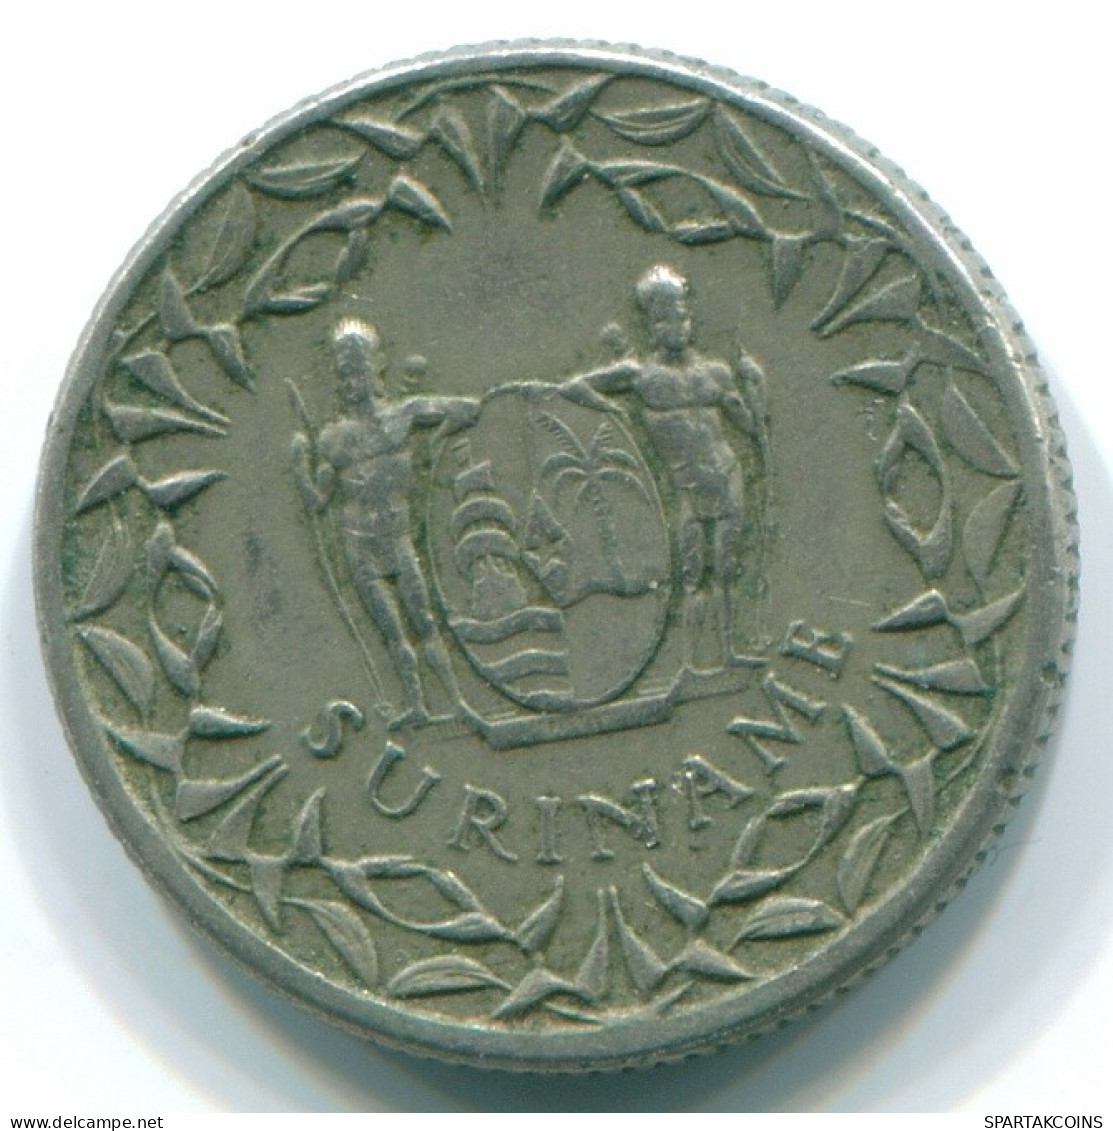 10 CENTS 1972 SURINAME Netherlands Nickel Colonial Coin #S13278.U.A - Surinam 1975 - ...